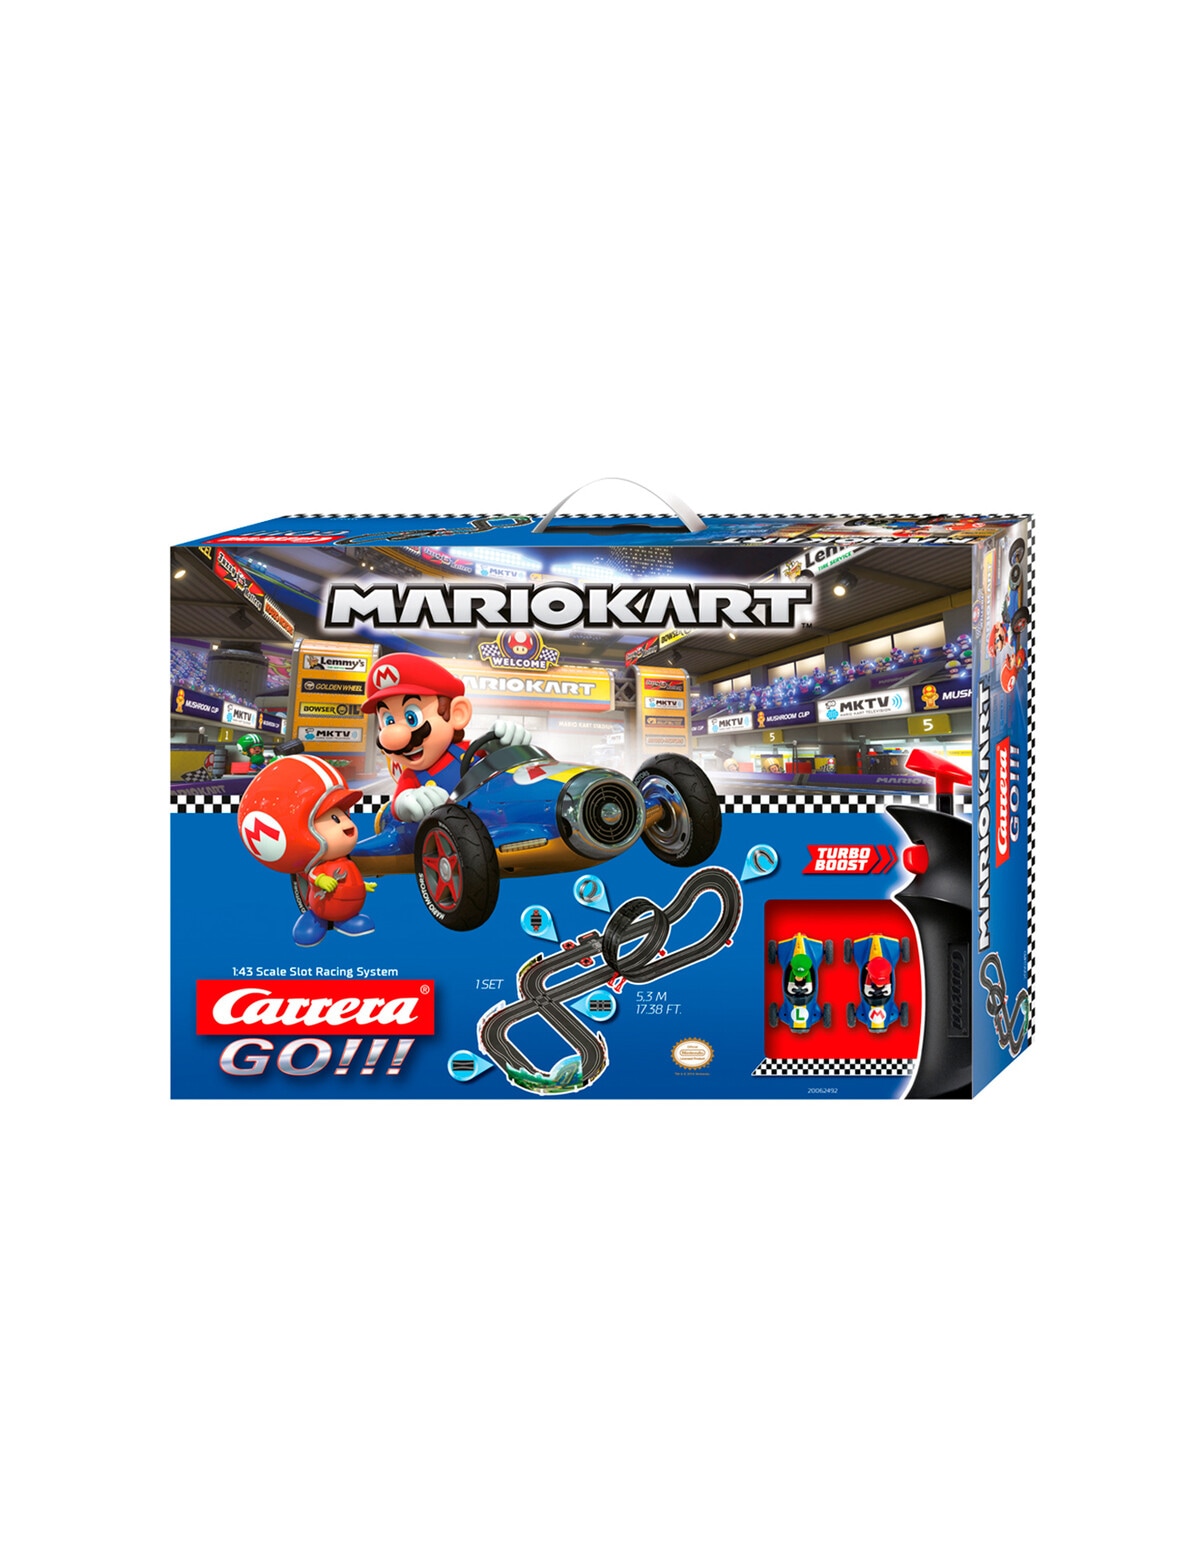 Carerra Go! Mario Kart, Mach 8 Carrera Go Race Set - Cars, Trucks & Remote  Control